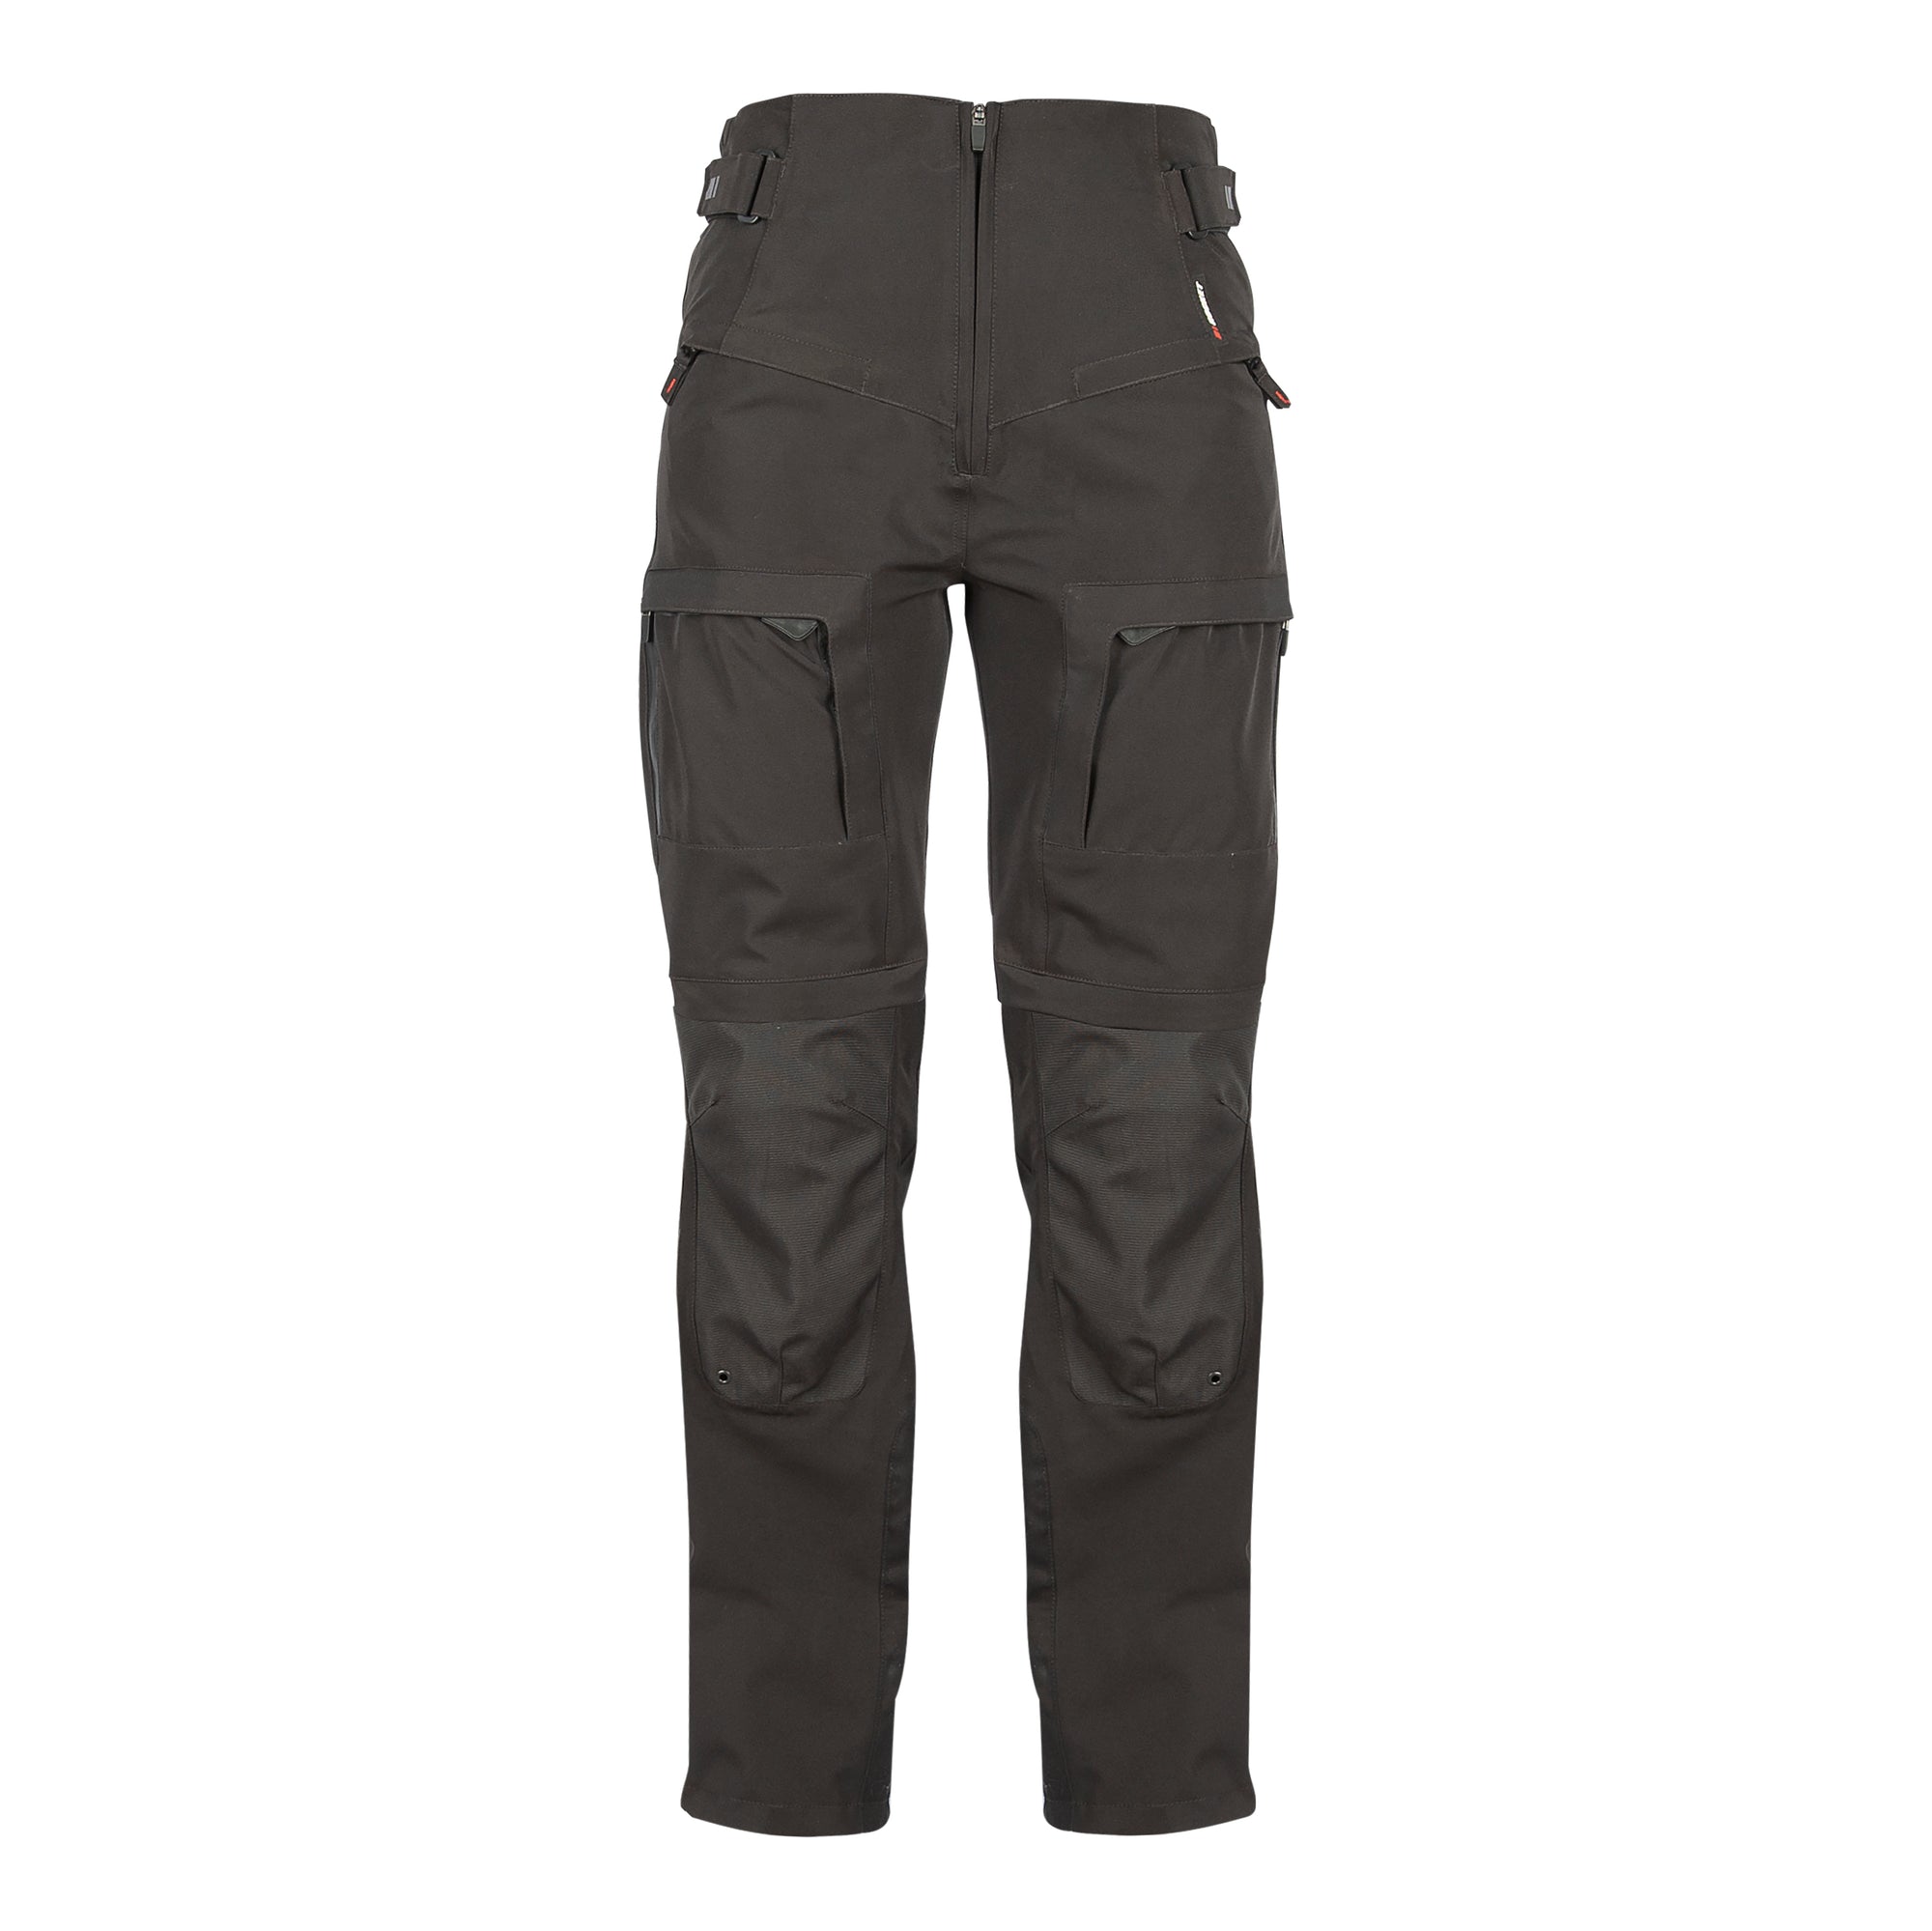 Joe Rocket Leather Pants - 30 x 29.5